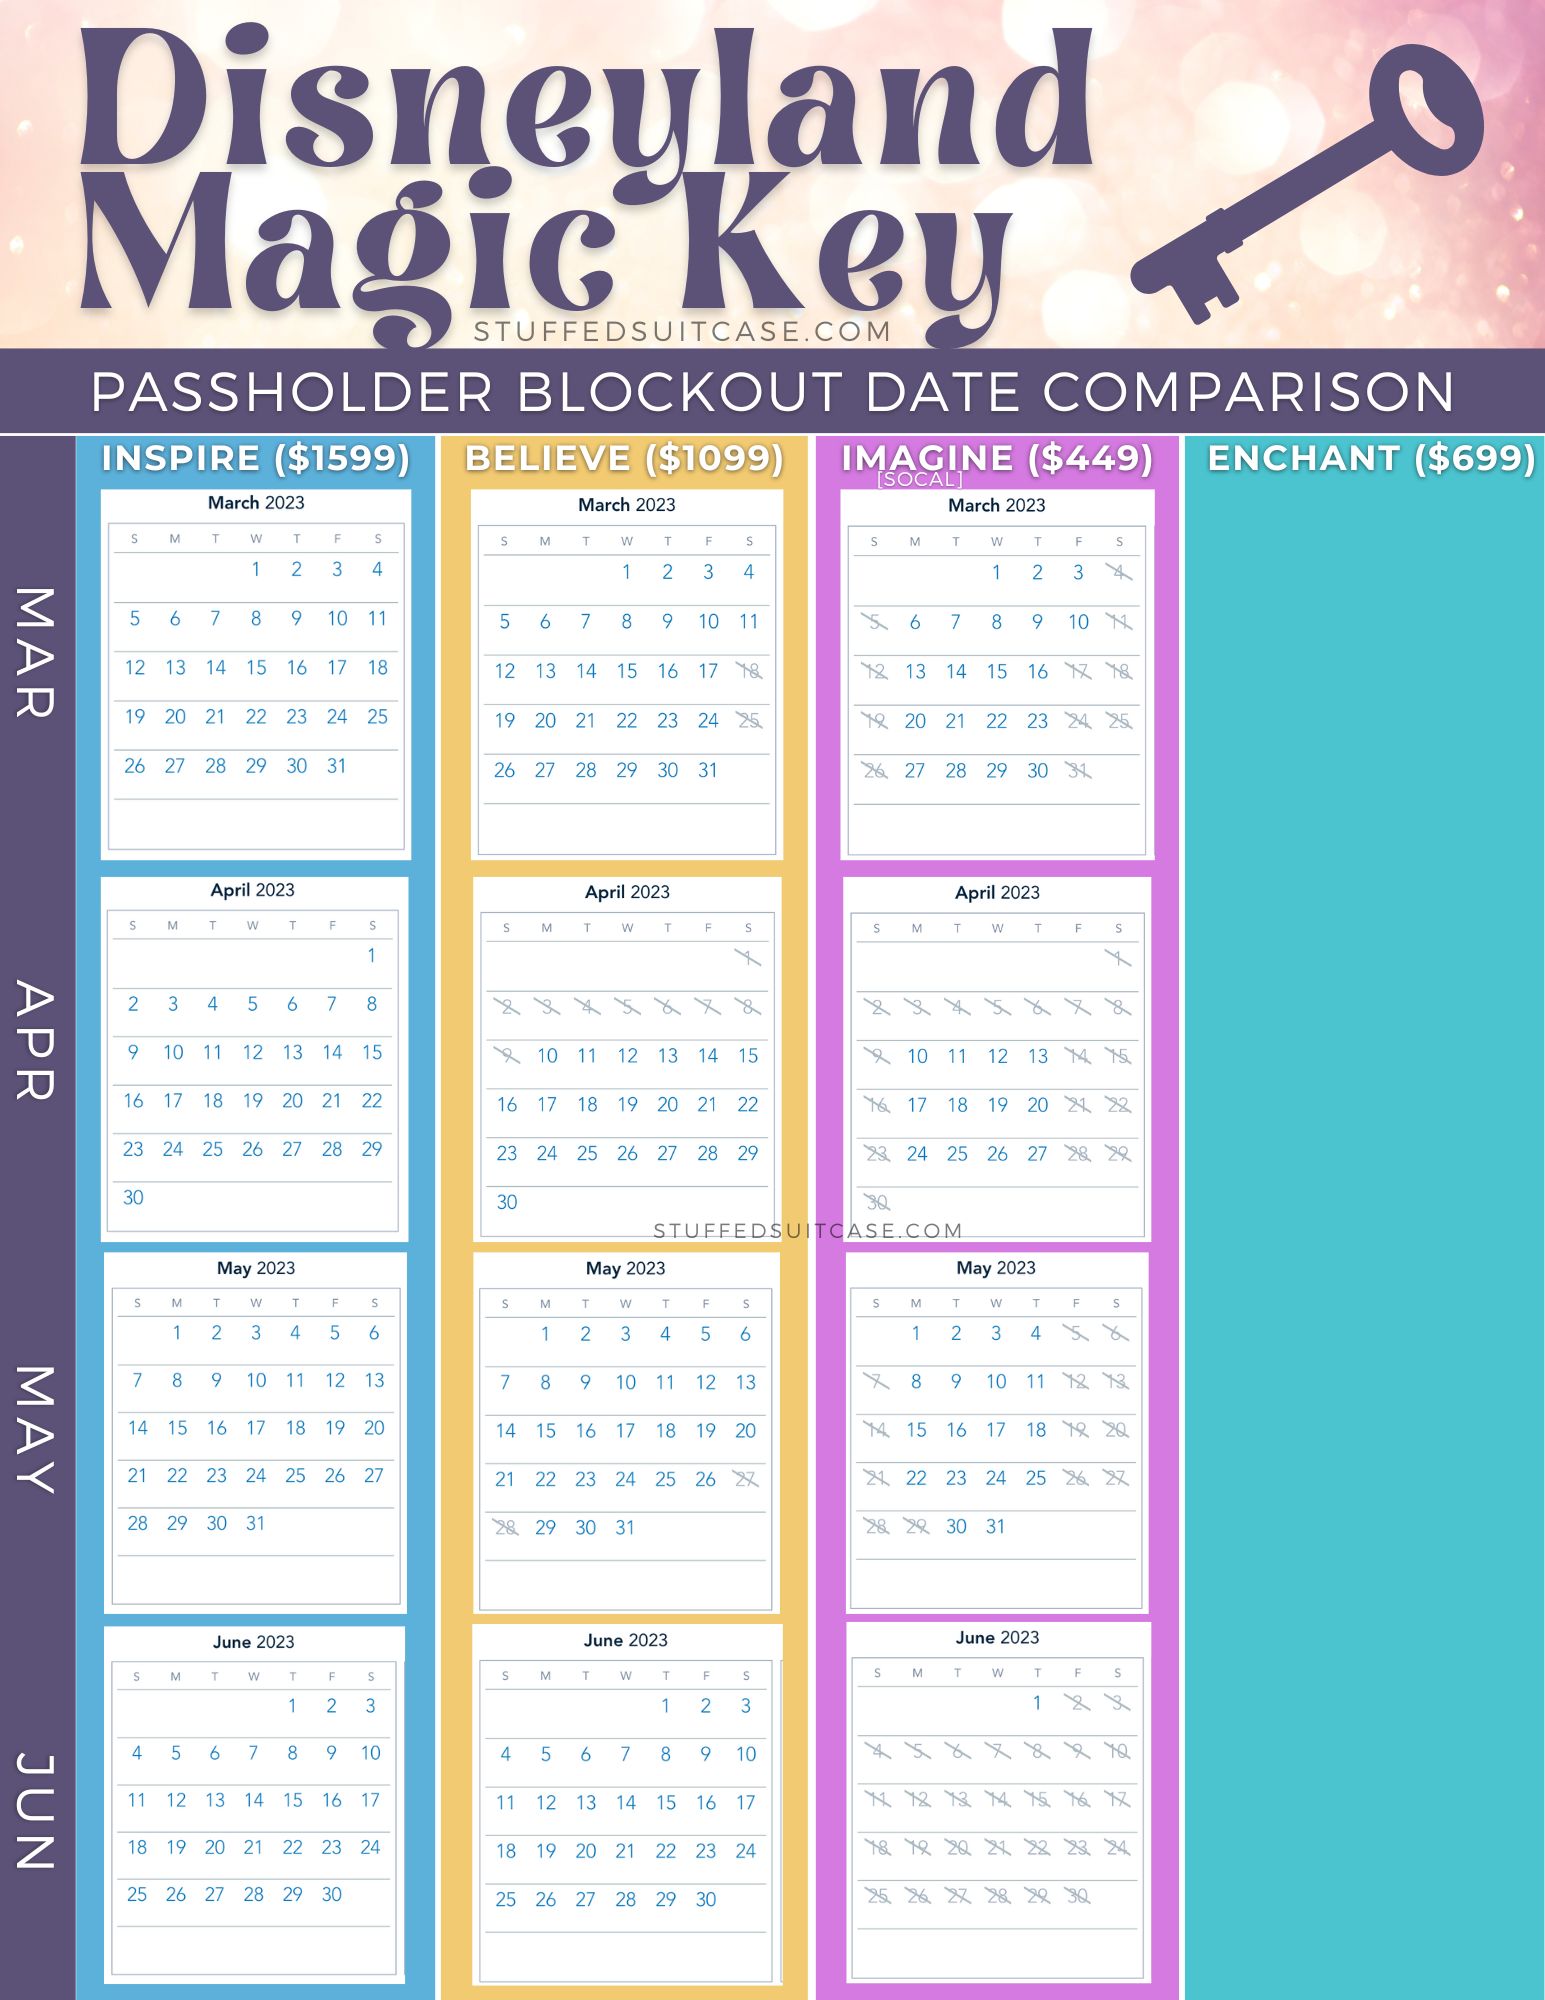 mar 2023-june 2023 blockout calendar comparison for disneyland magic key 